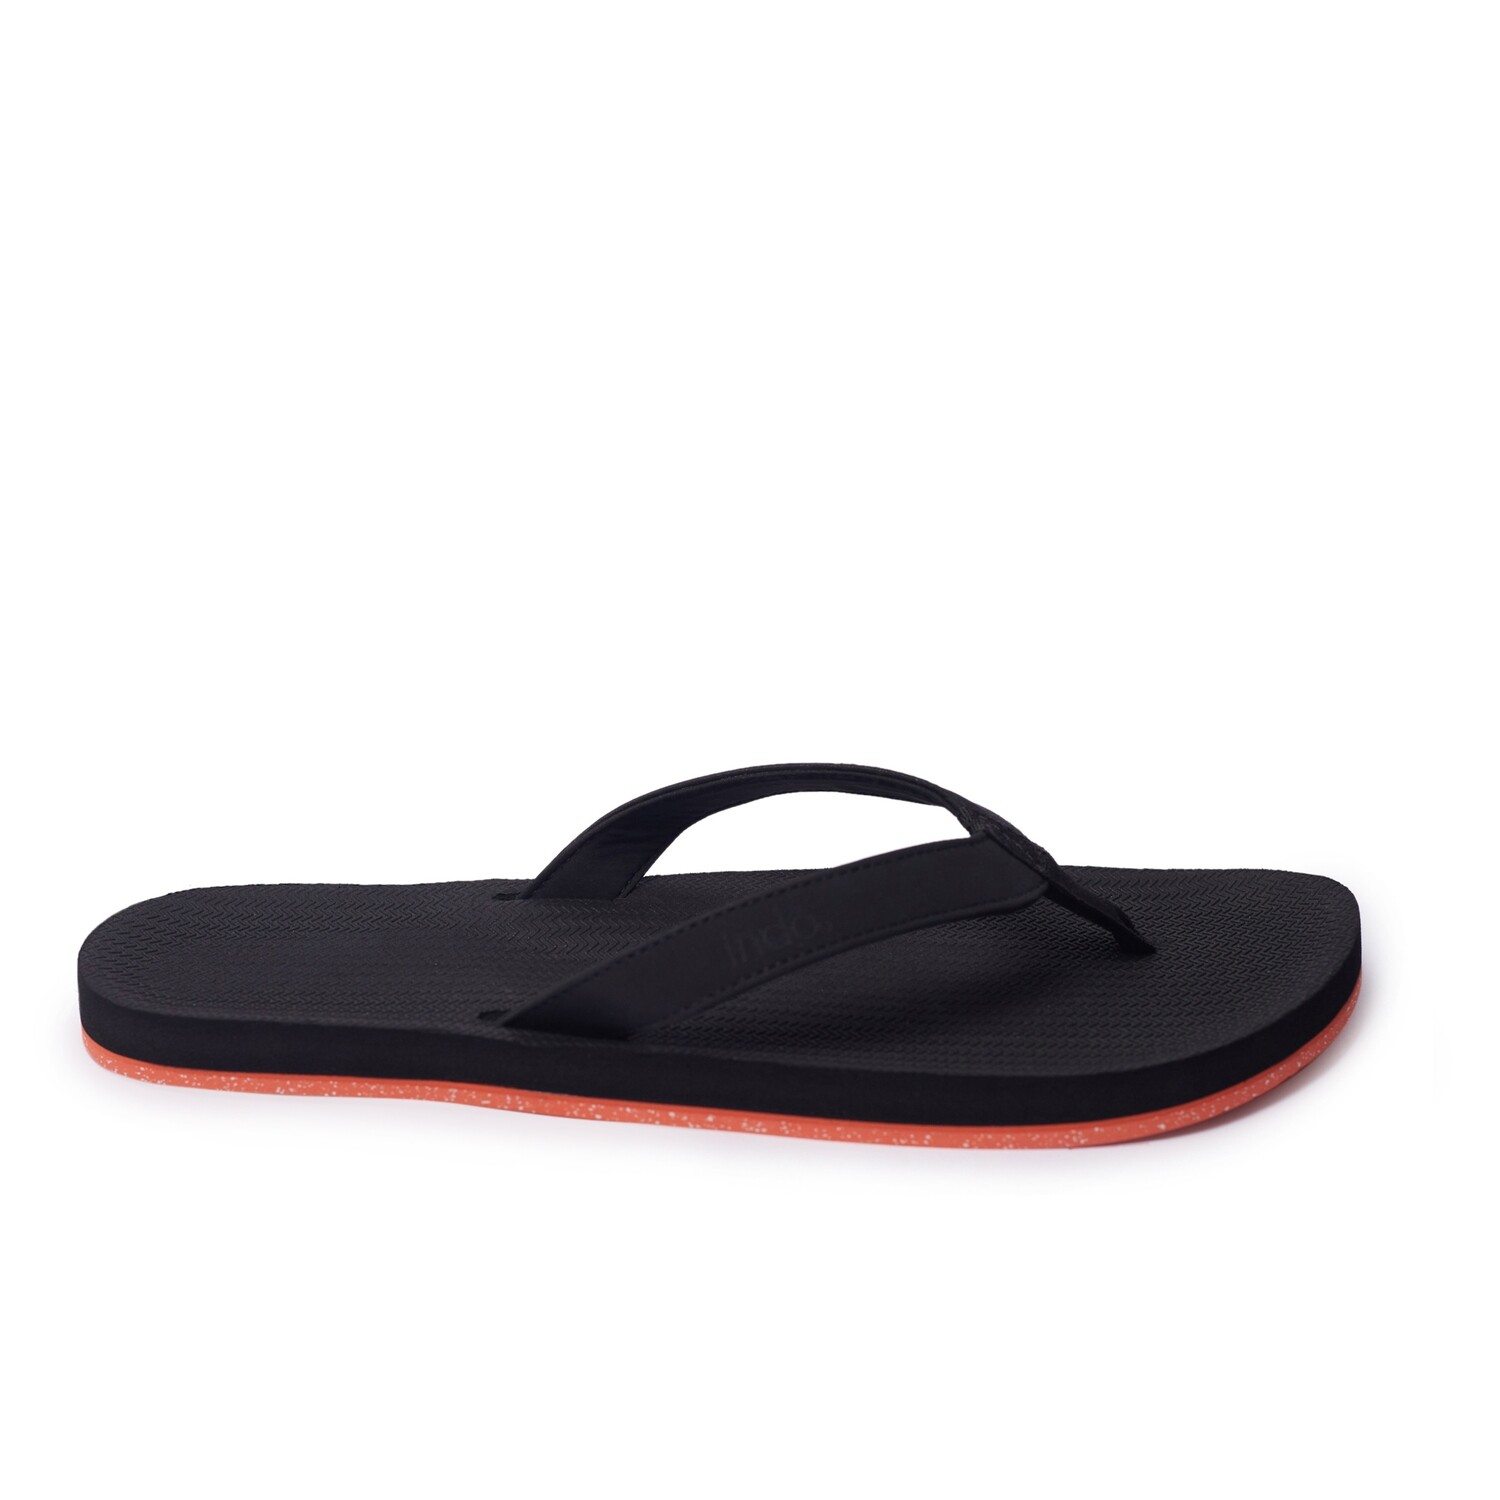 Mens Indosole - Flip Flops Sneaker Sole - Black with Orange Sole